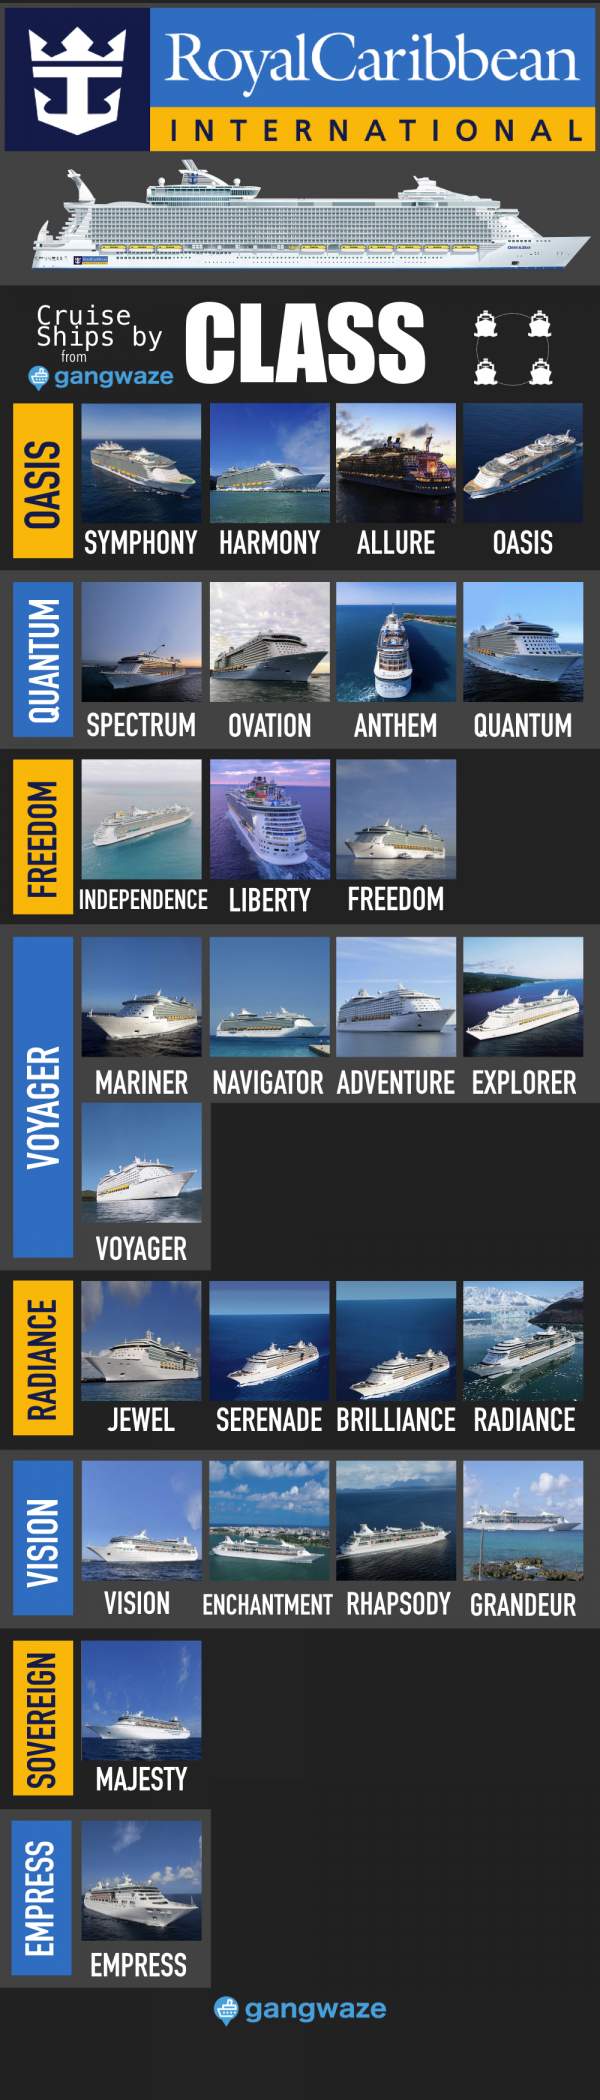 rank the royal caribbean cruise ships